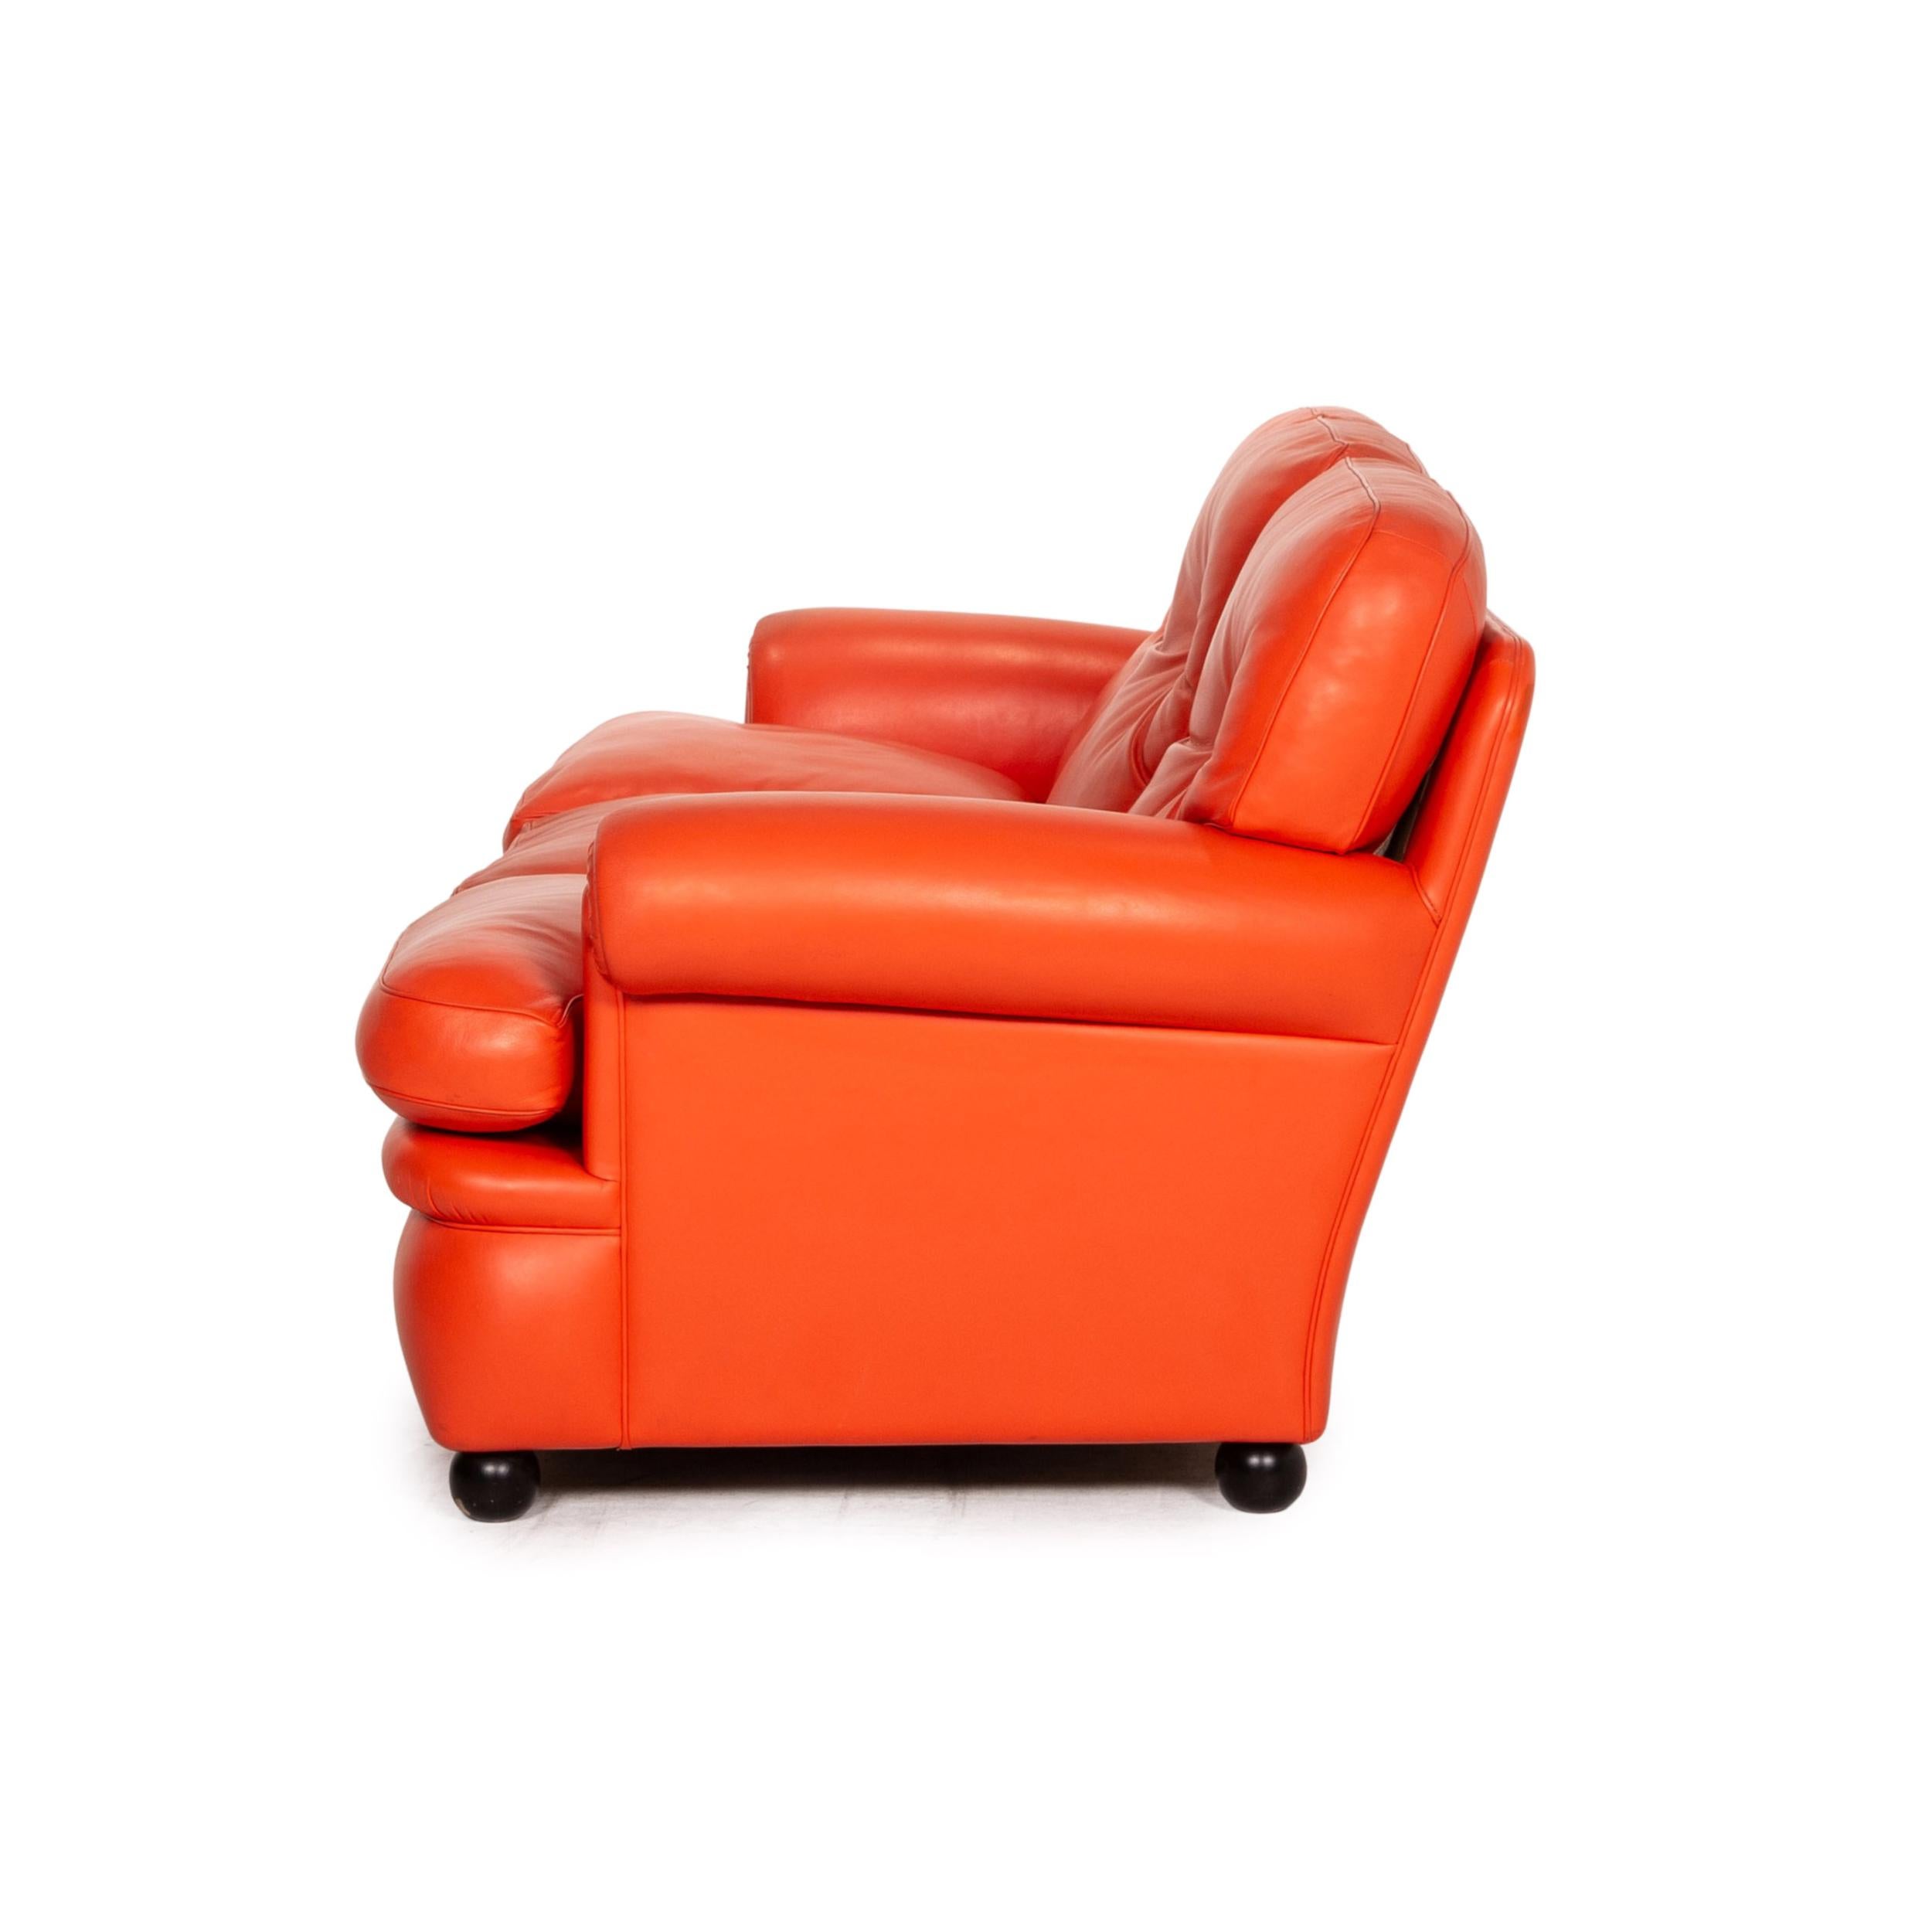 Poltrona Frau Dream on Leather Sofa Coral Orange Chesterfield Sofa Couch 5